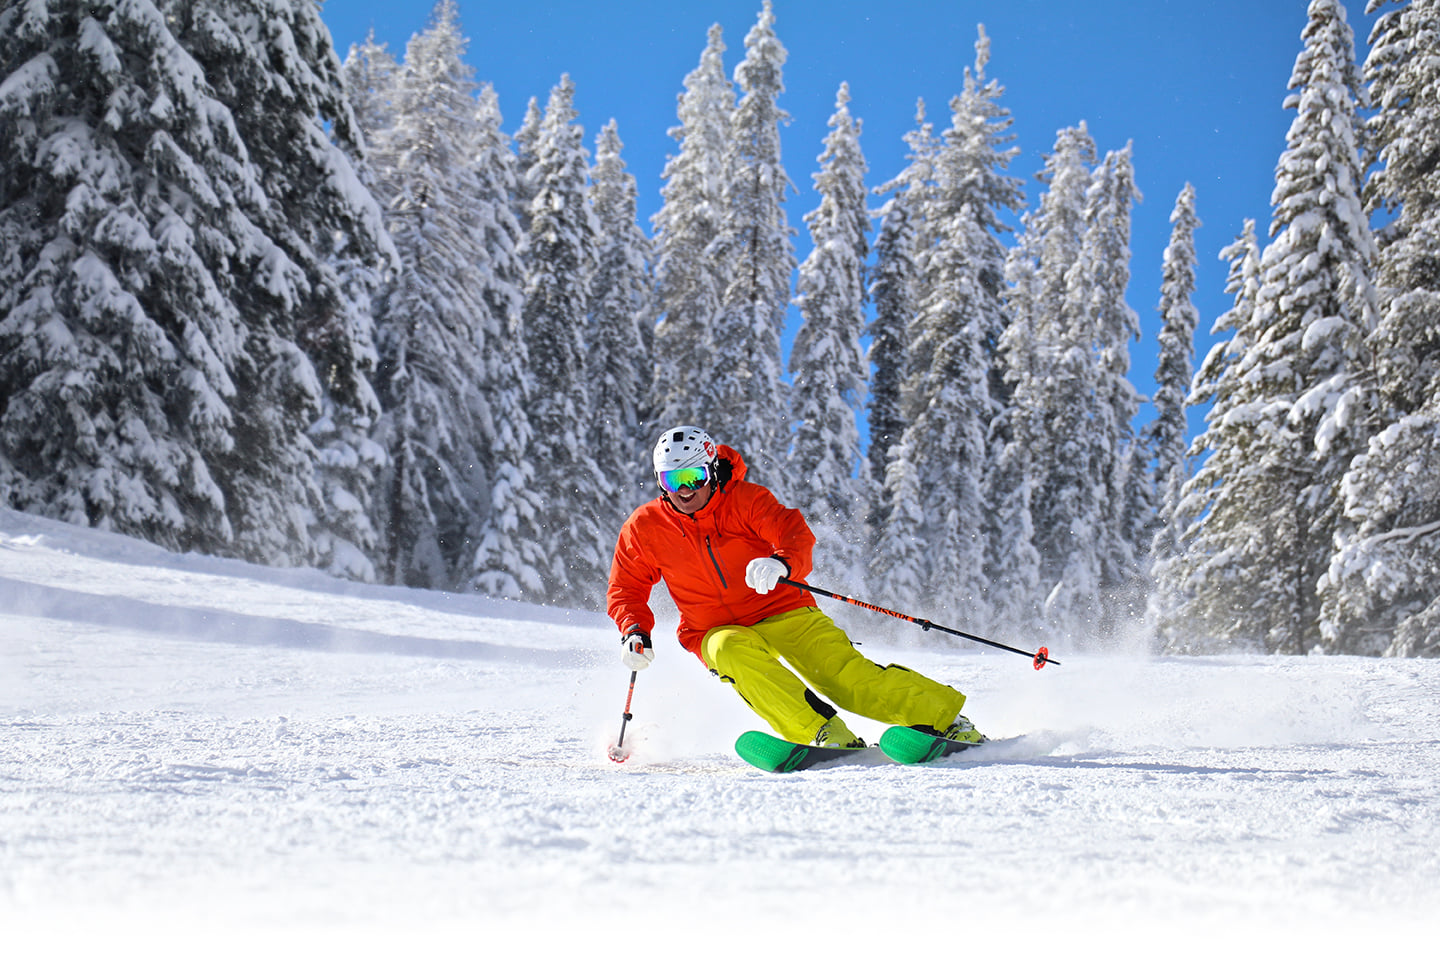 Ski Idaho Reports Record Number Of Skier Visits